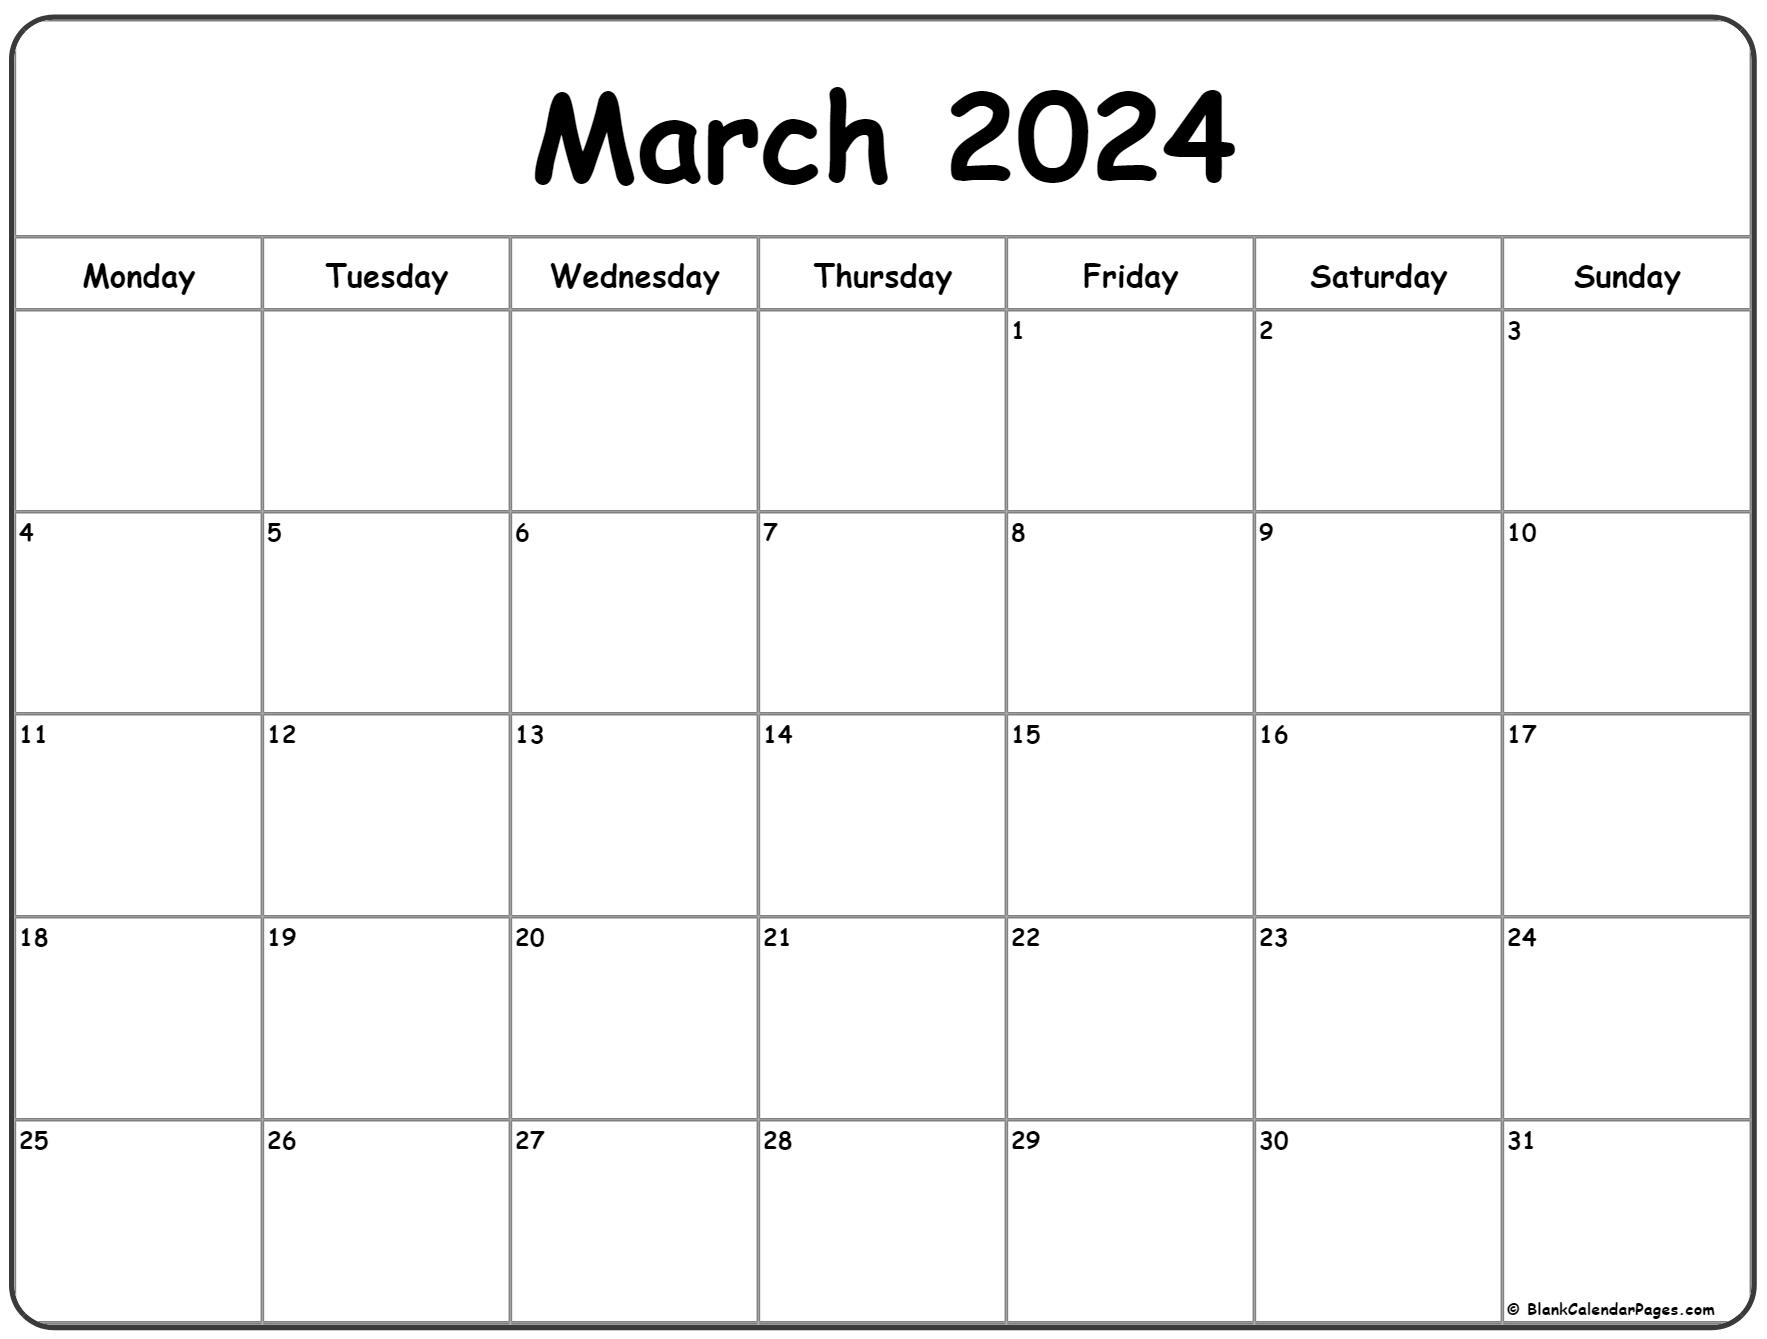 March 2024 Monday Calendar | Monday To Sunday for 2024 Calendar Printable March